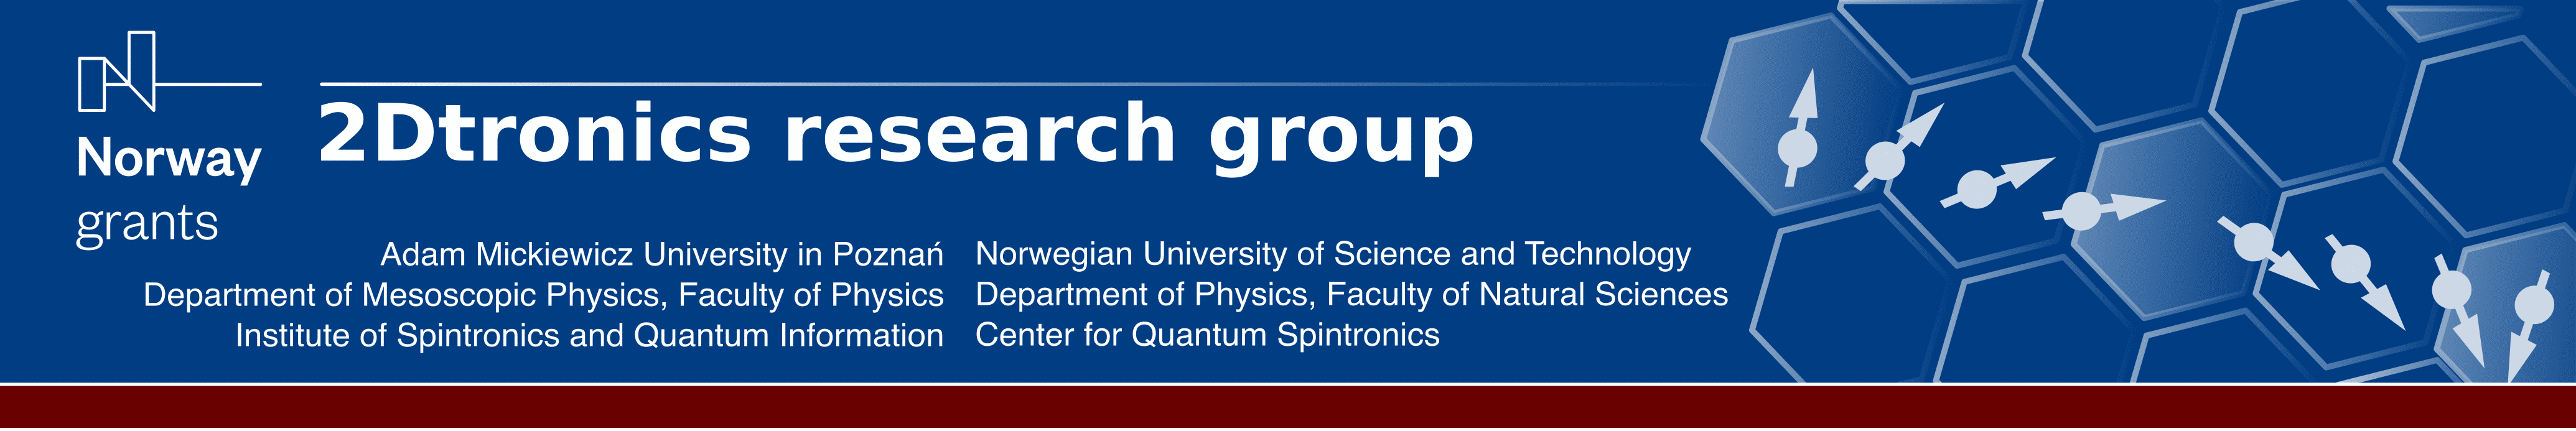 2Dtronics group, Norway grants, UAM, NTNU